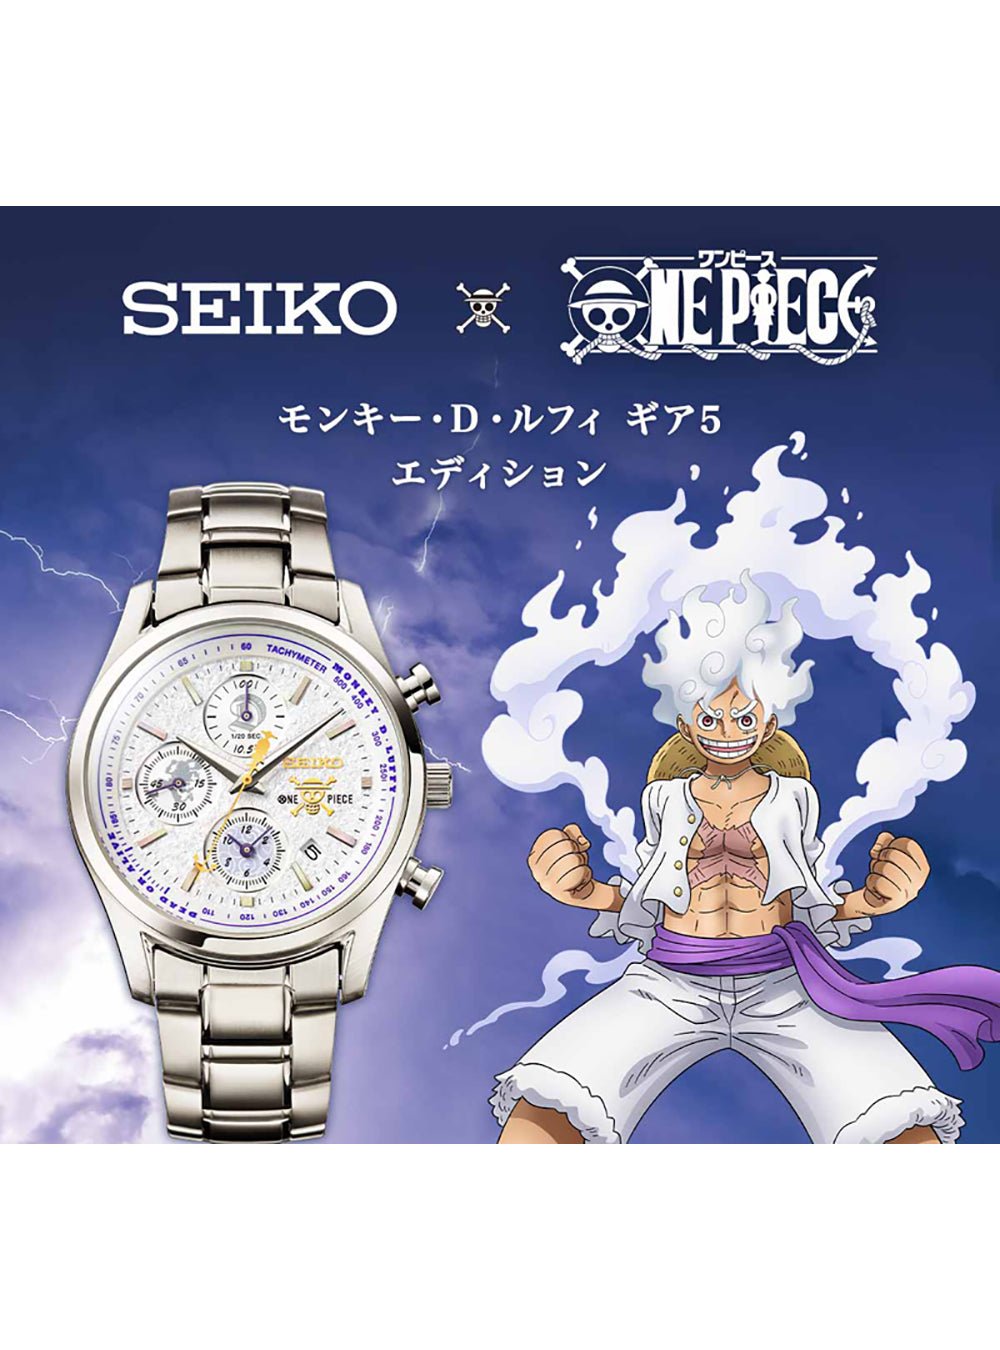 SEIKO  ワンピース　gear5  コラボ　時計限定5000本です